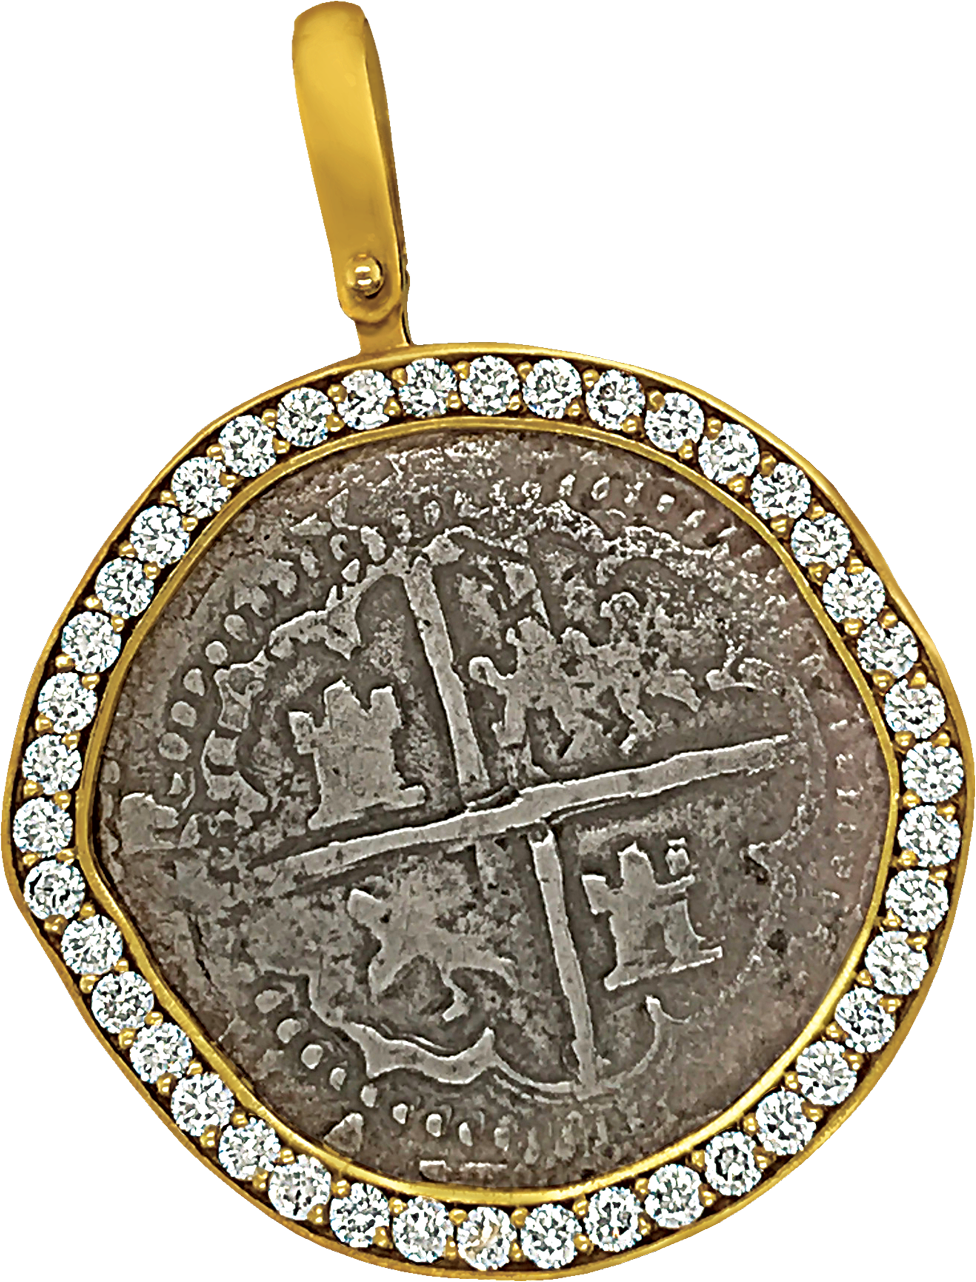 Shipwreck Gold Coin Necklace - Gold Ducat Lost Treasure Coin